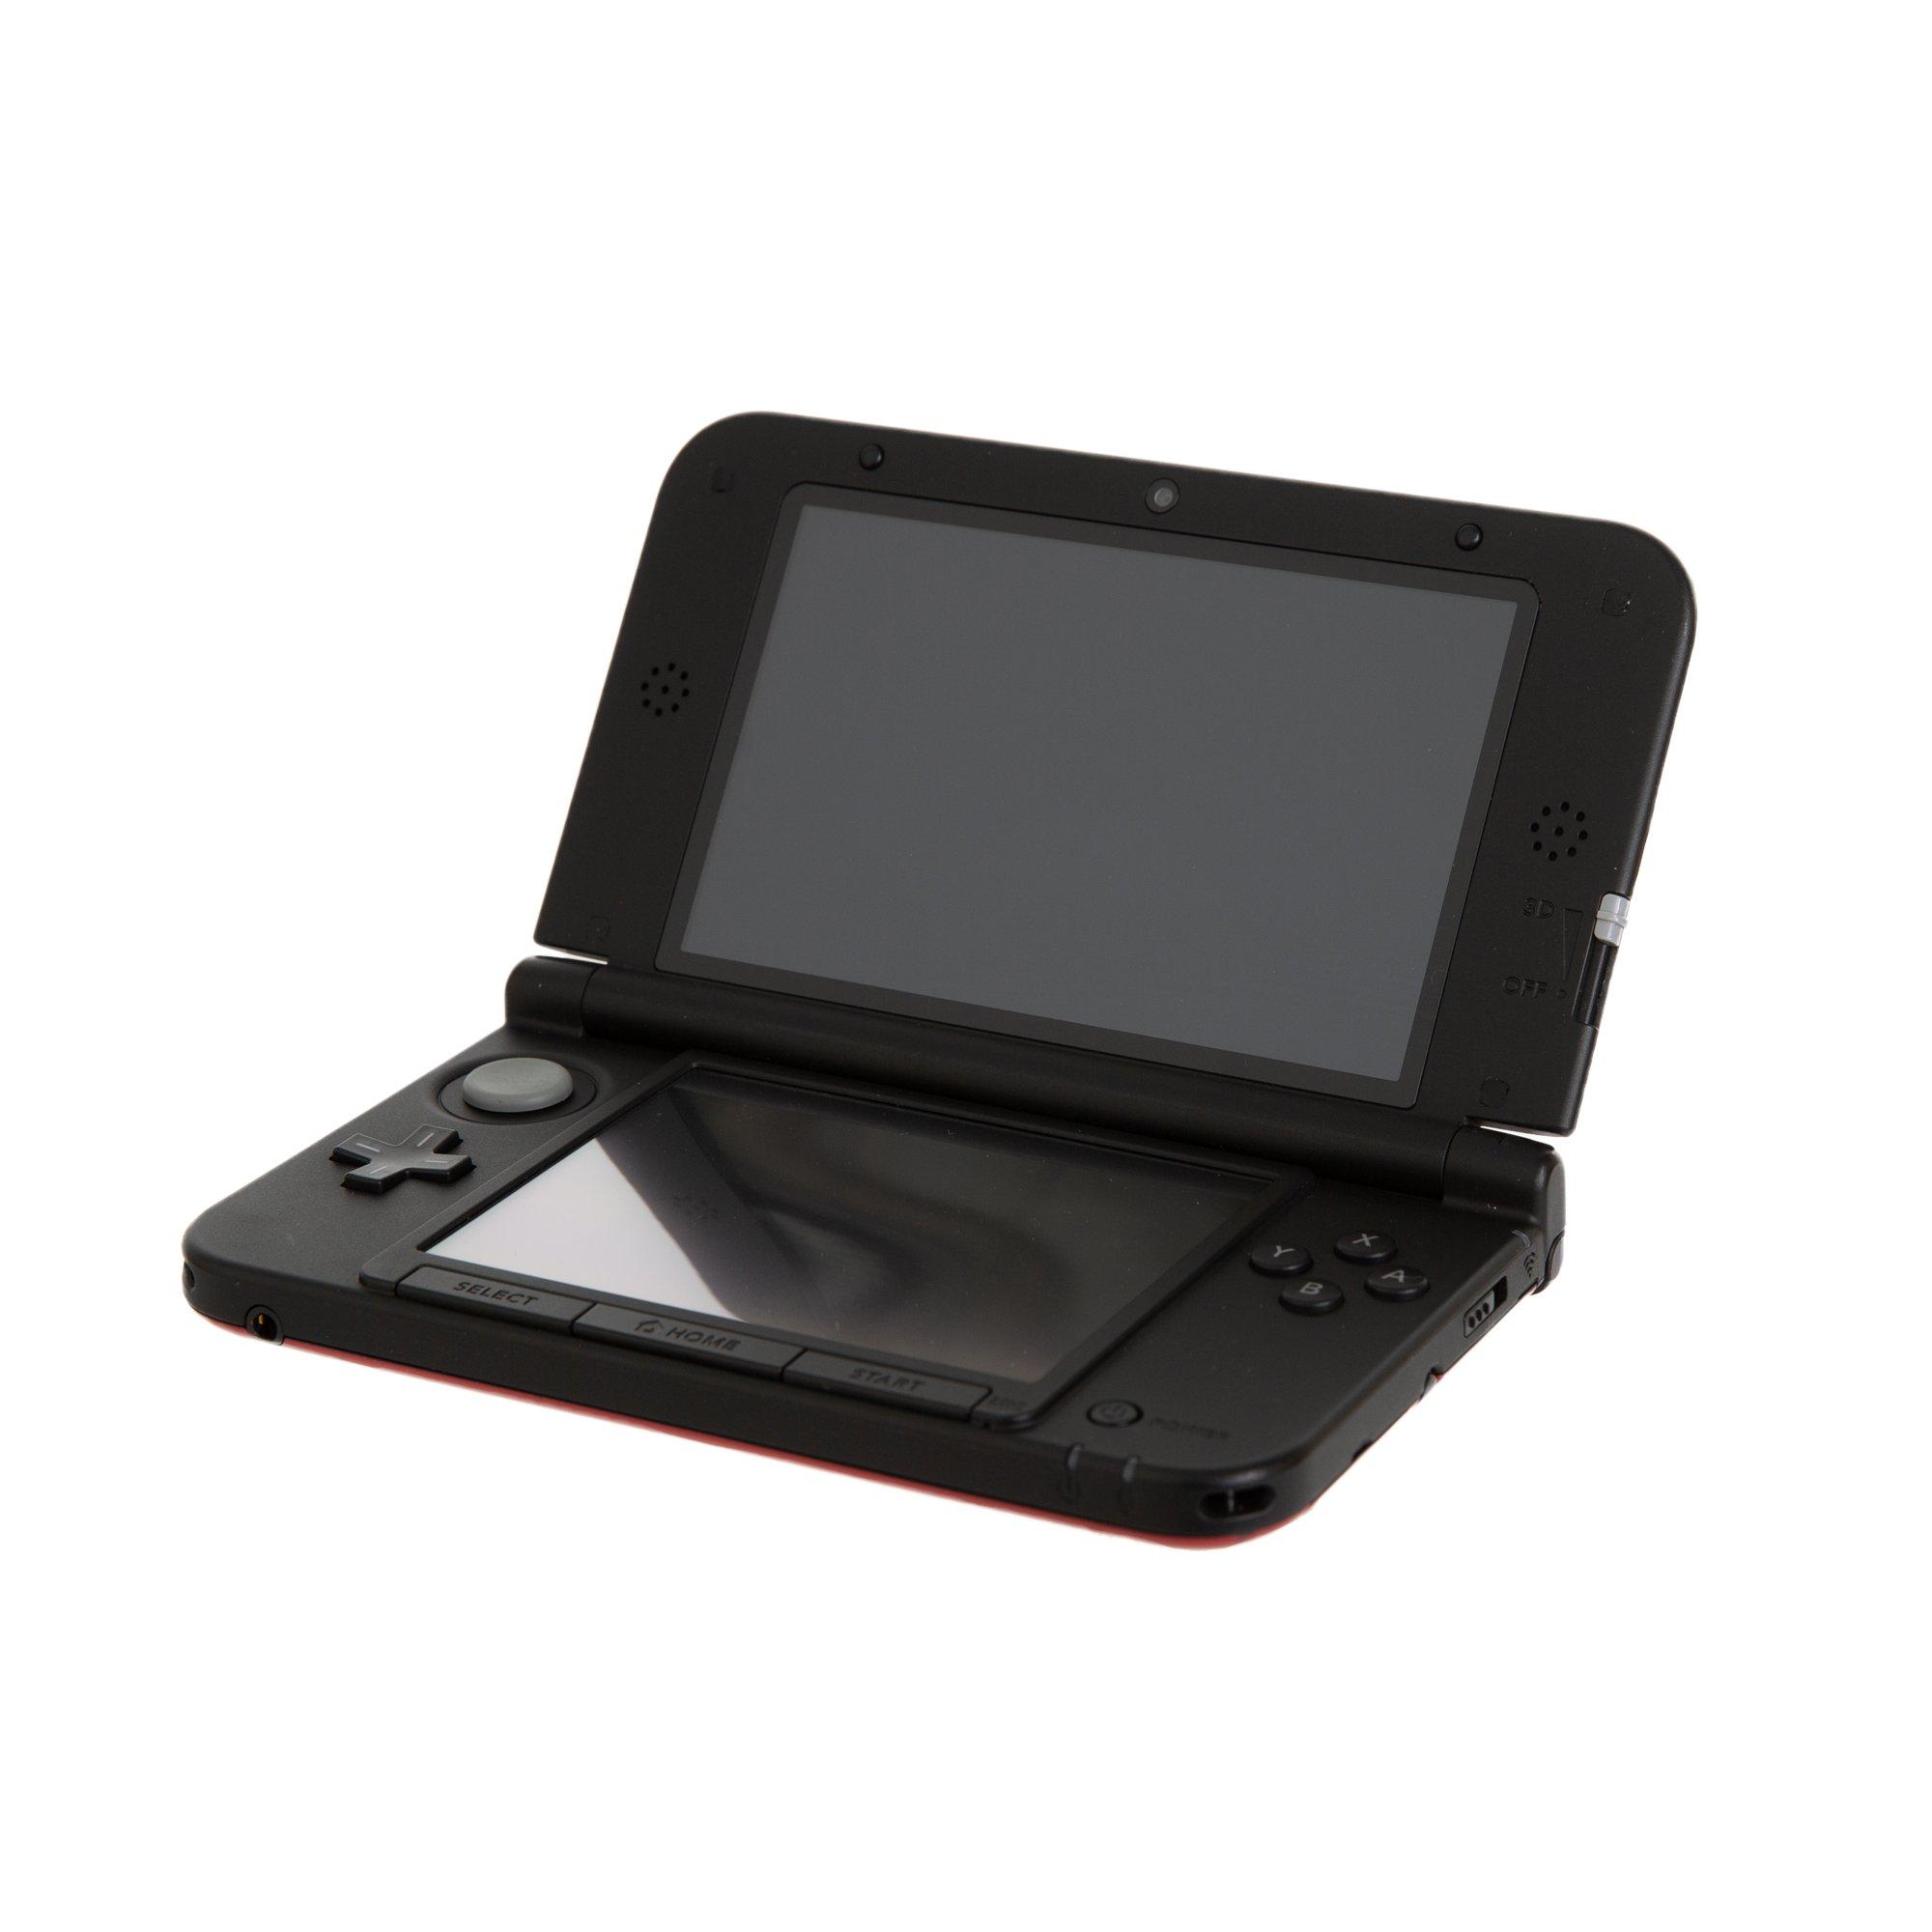 Nintendo 3DS XL Console - Blue | GameStop